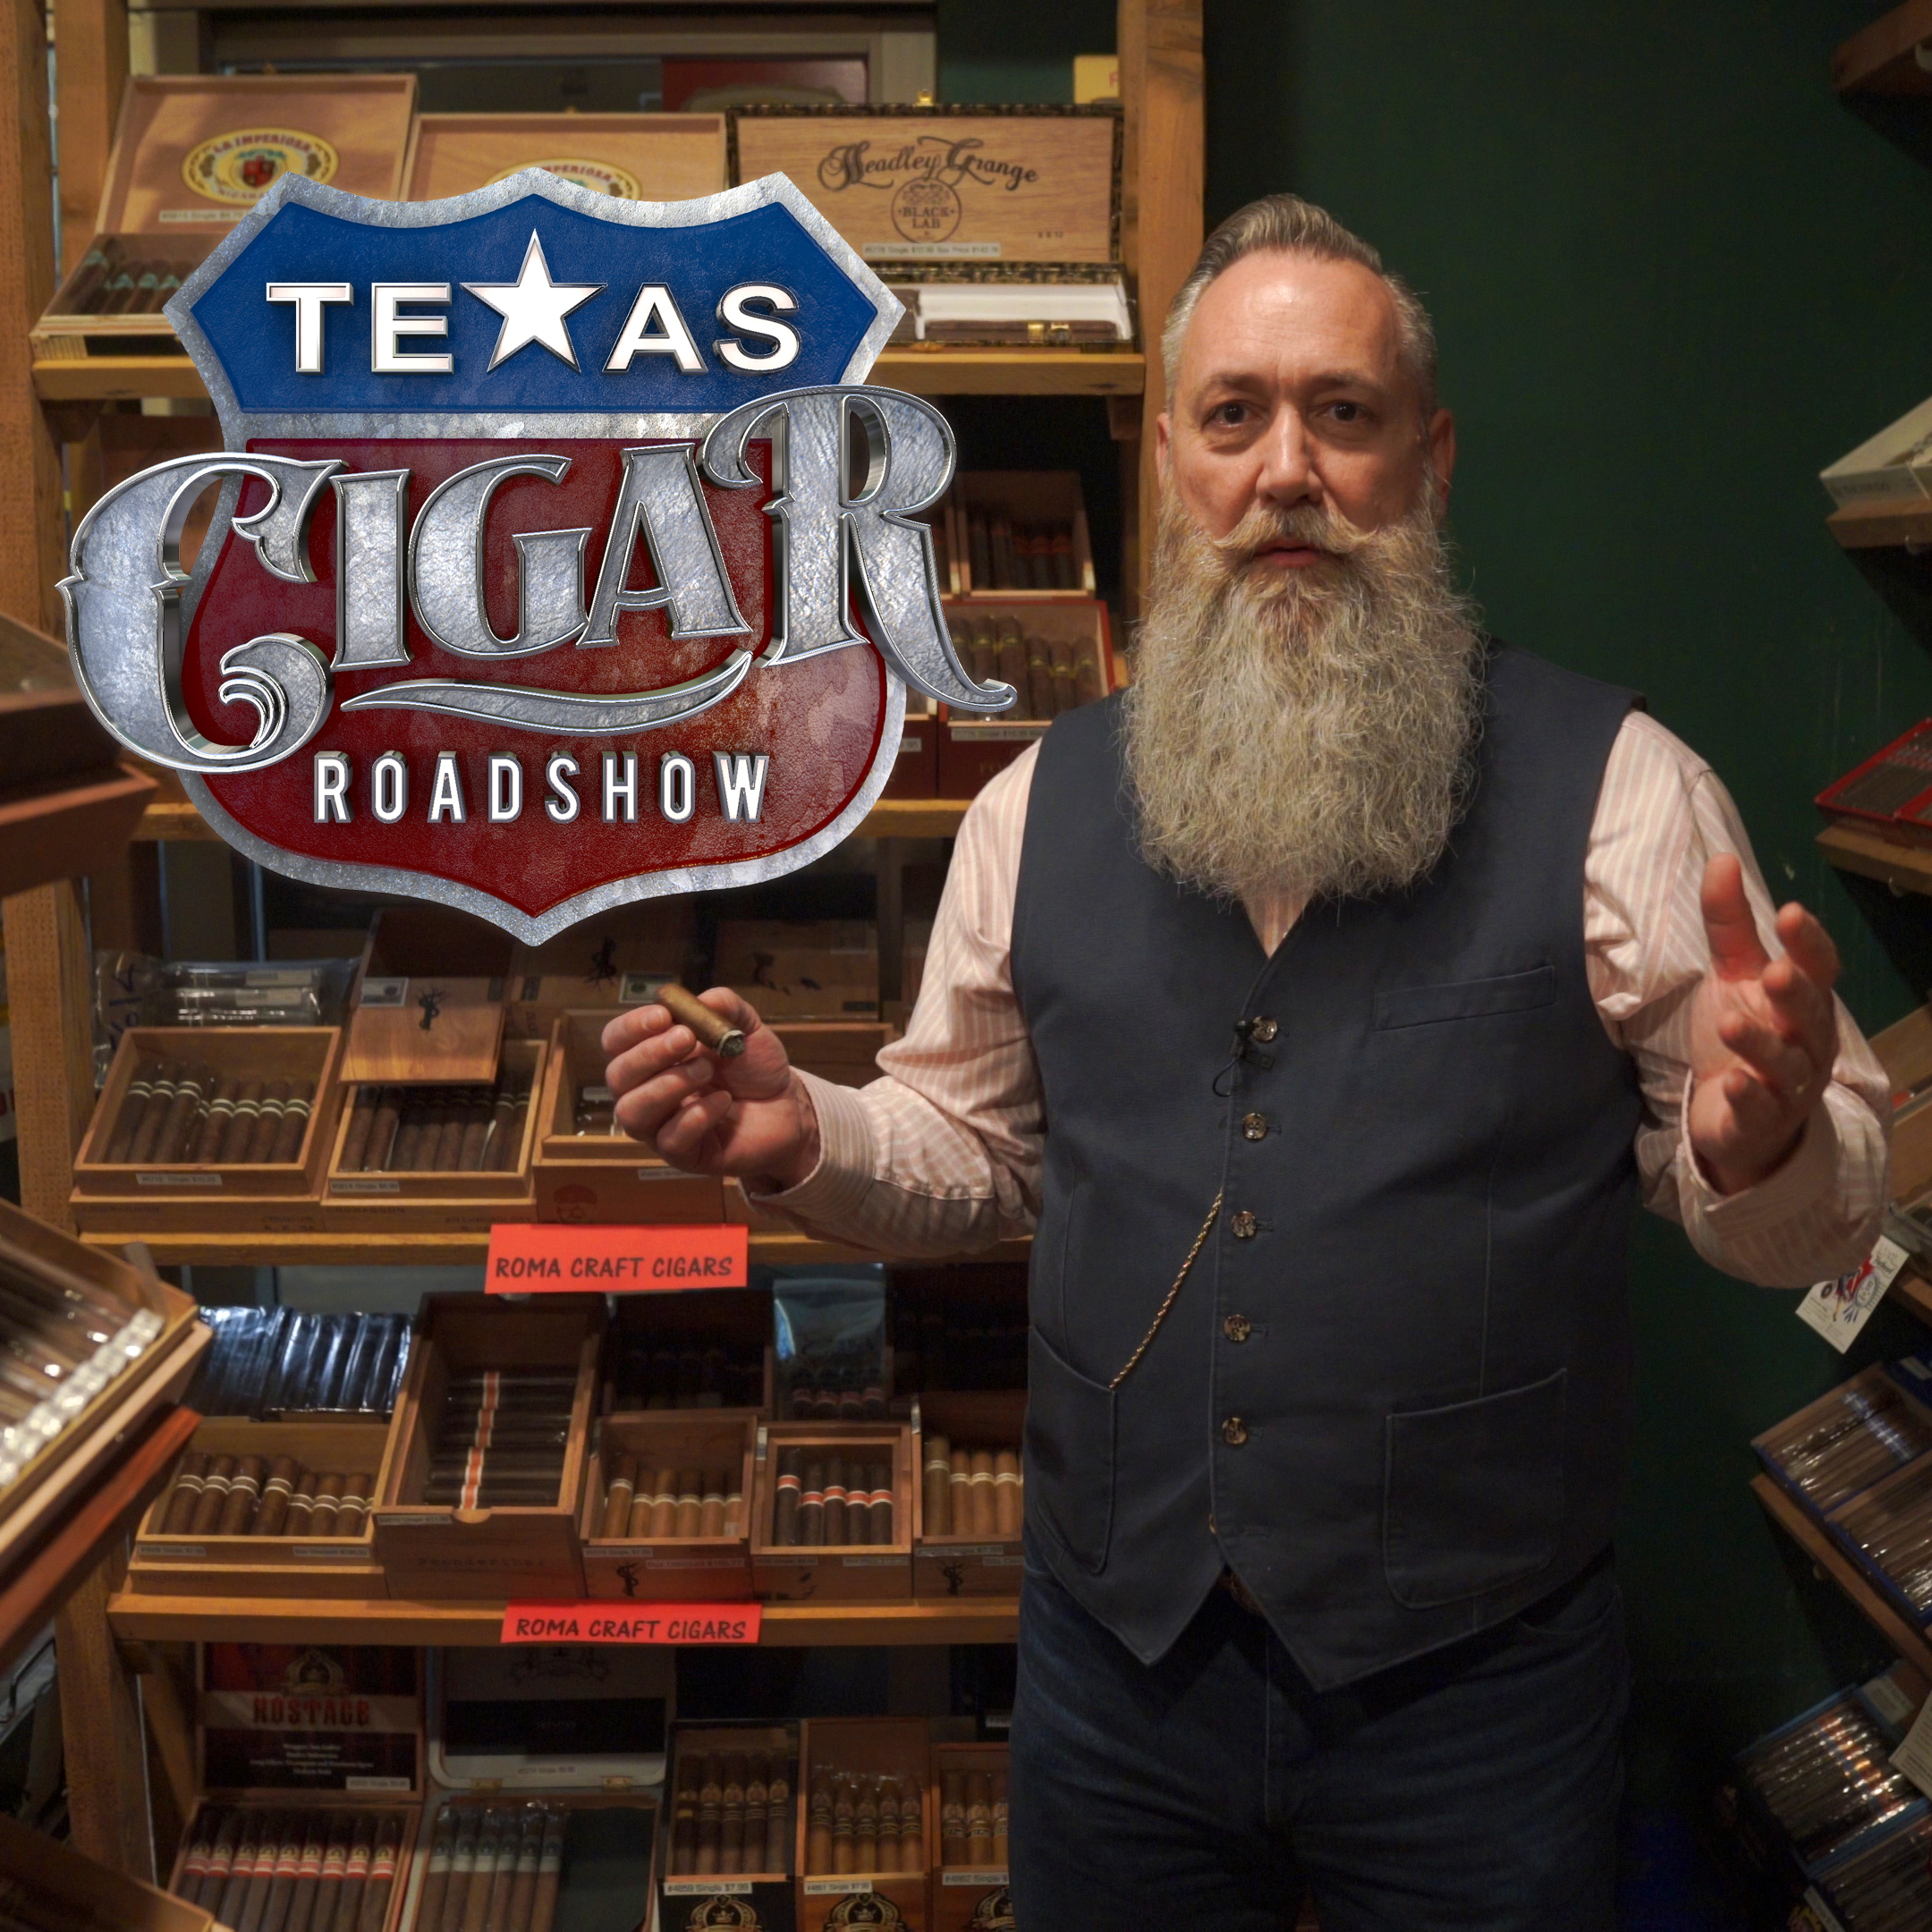 TexasCigarRoadshow's Channel